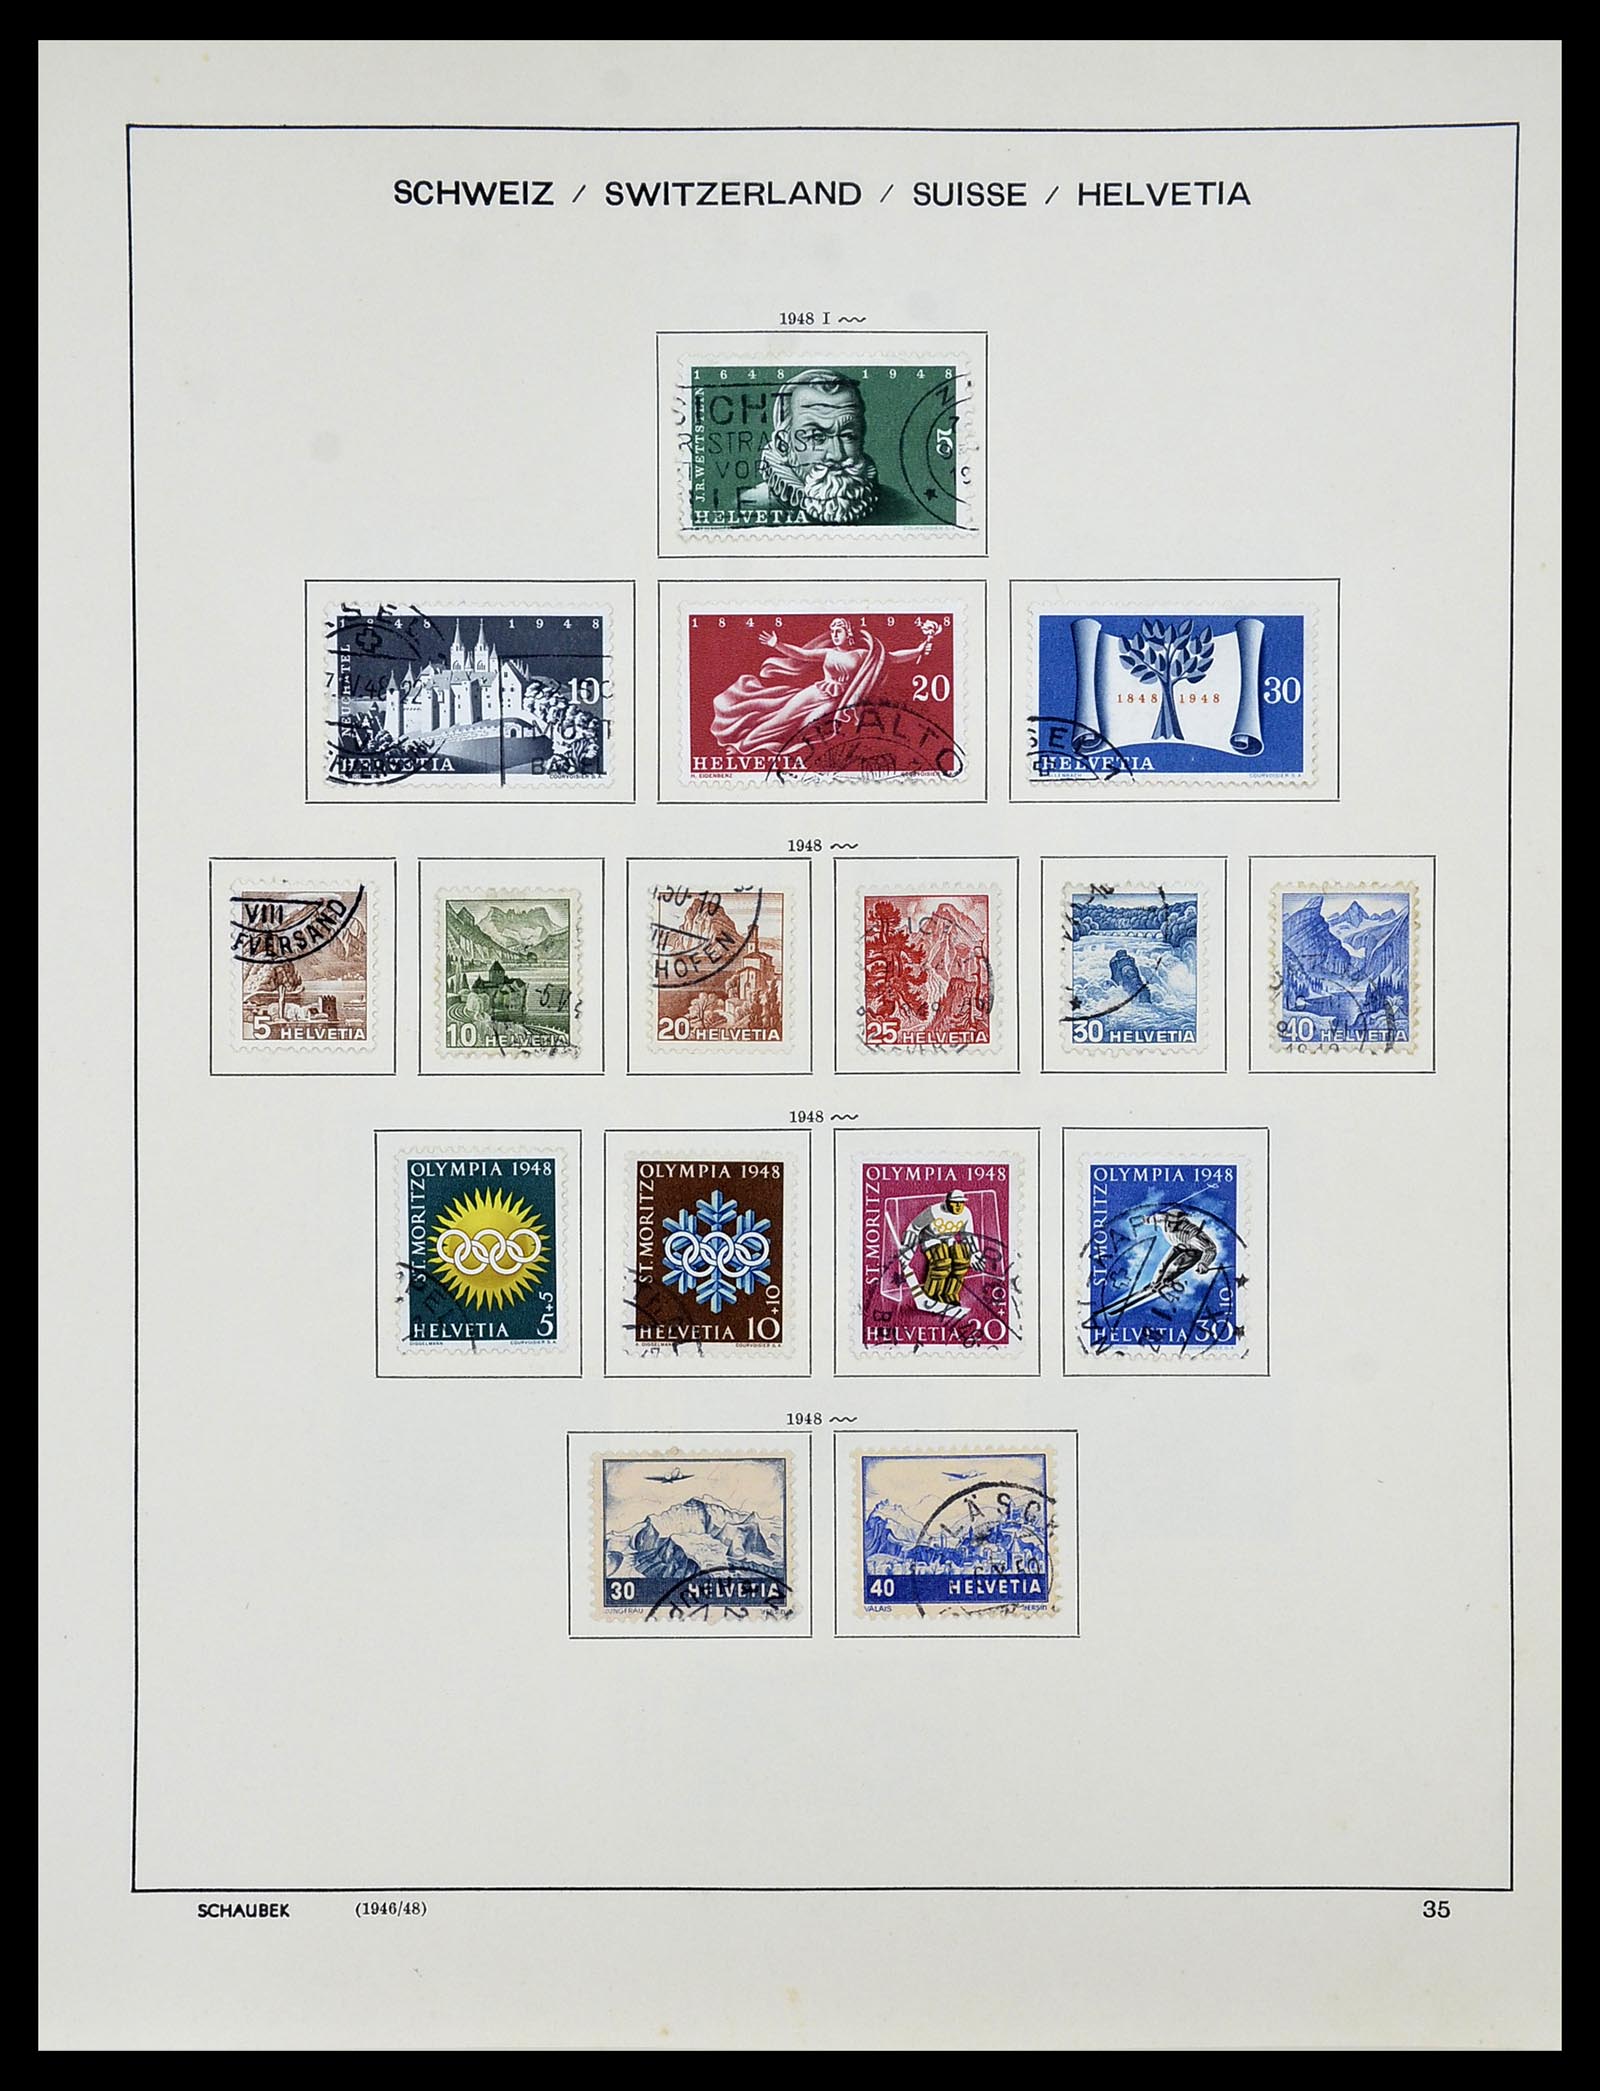 34204 046 - Stamp collection 34204 Switzerland 1862-2001.